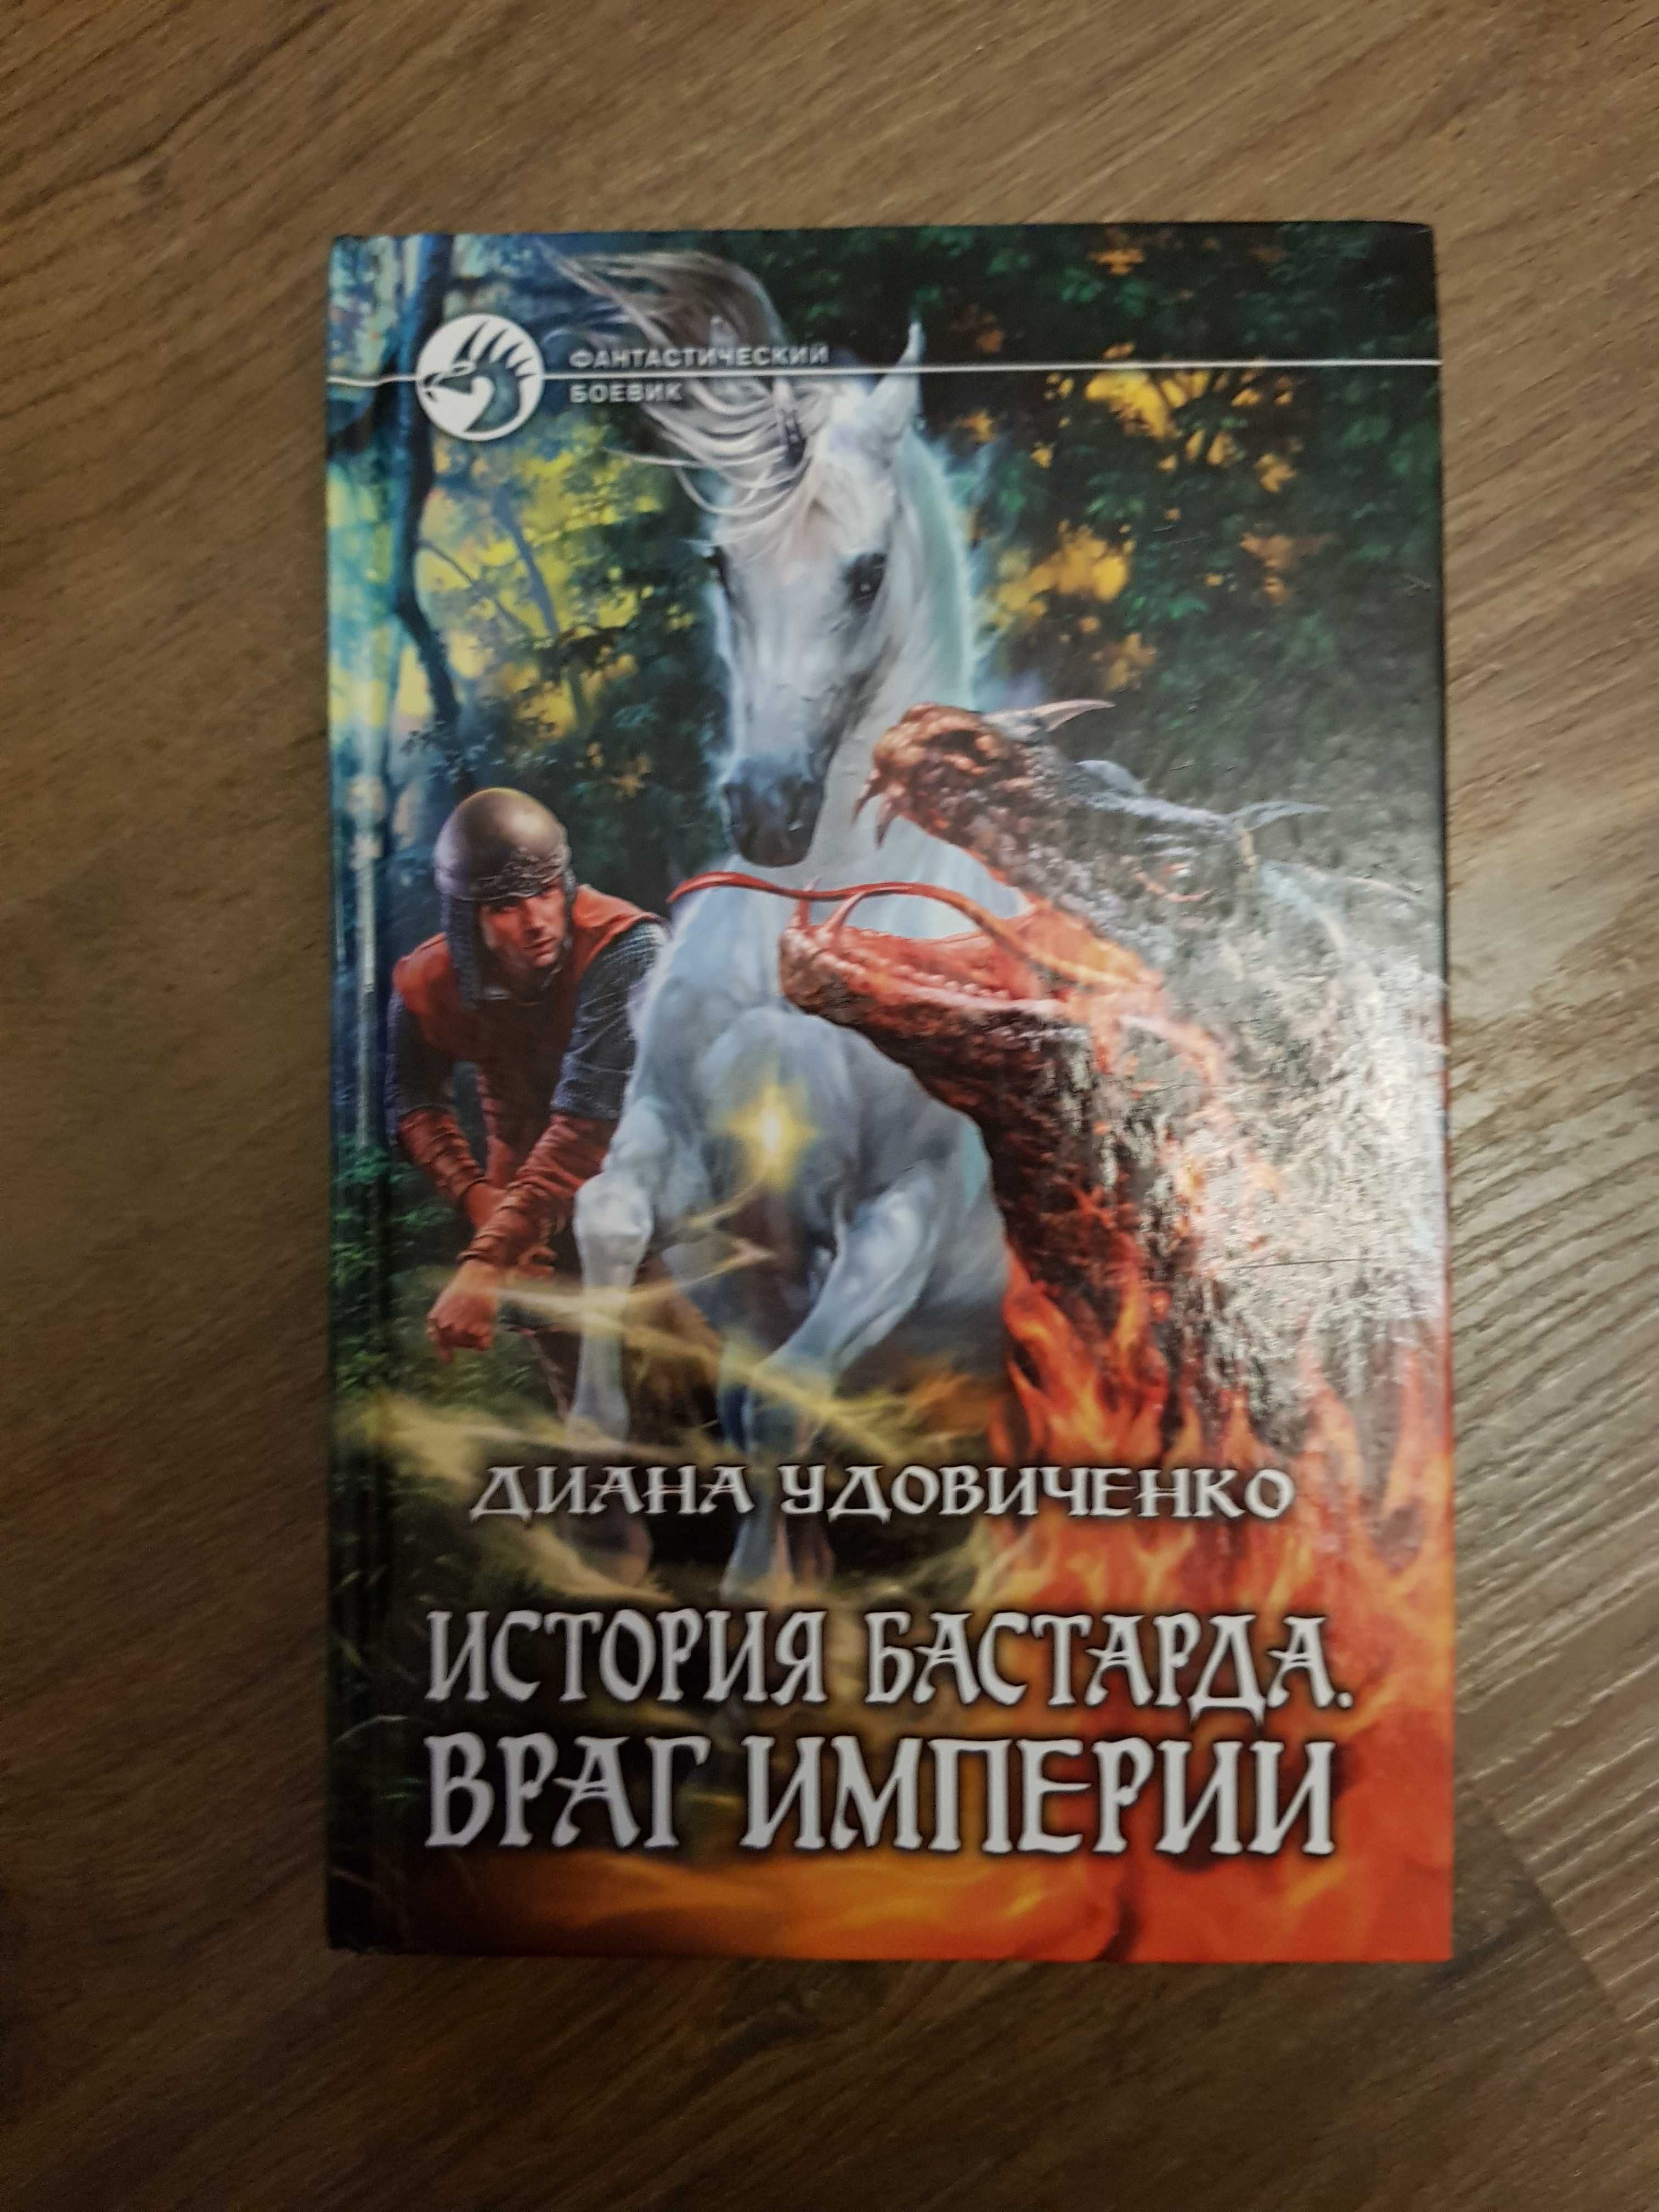 Книги Фантастики Распопов Иванович Злотников